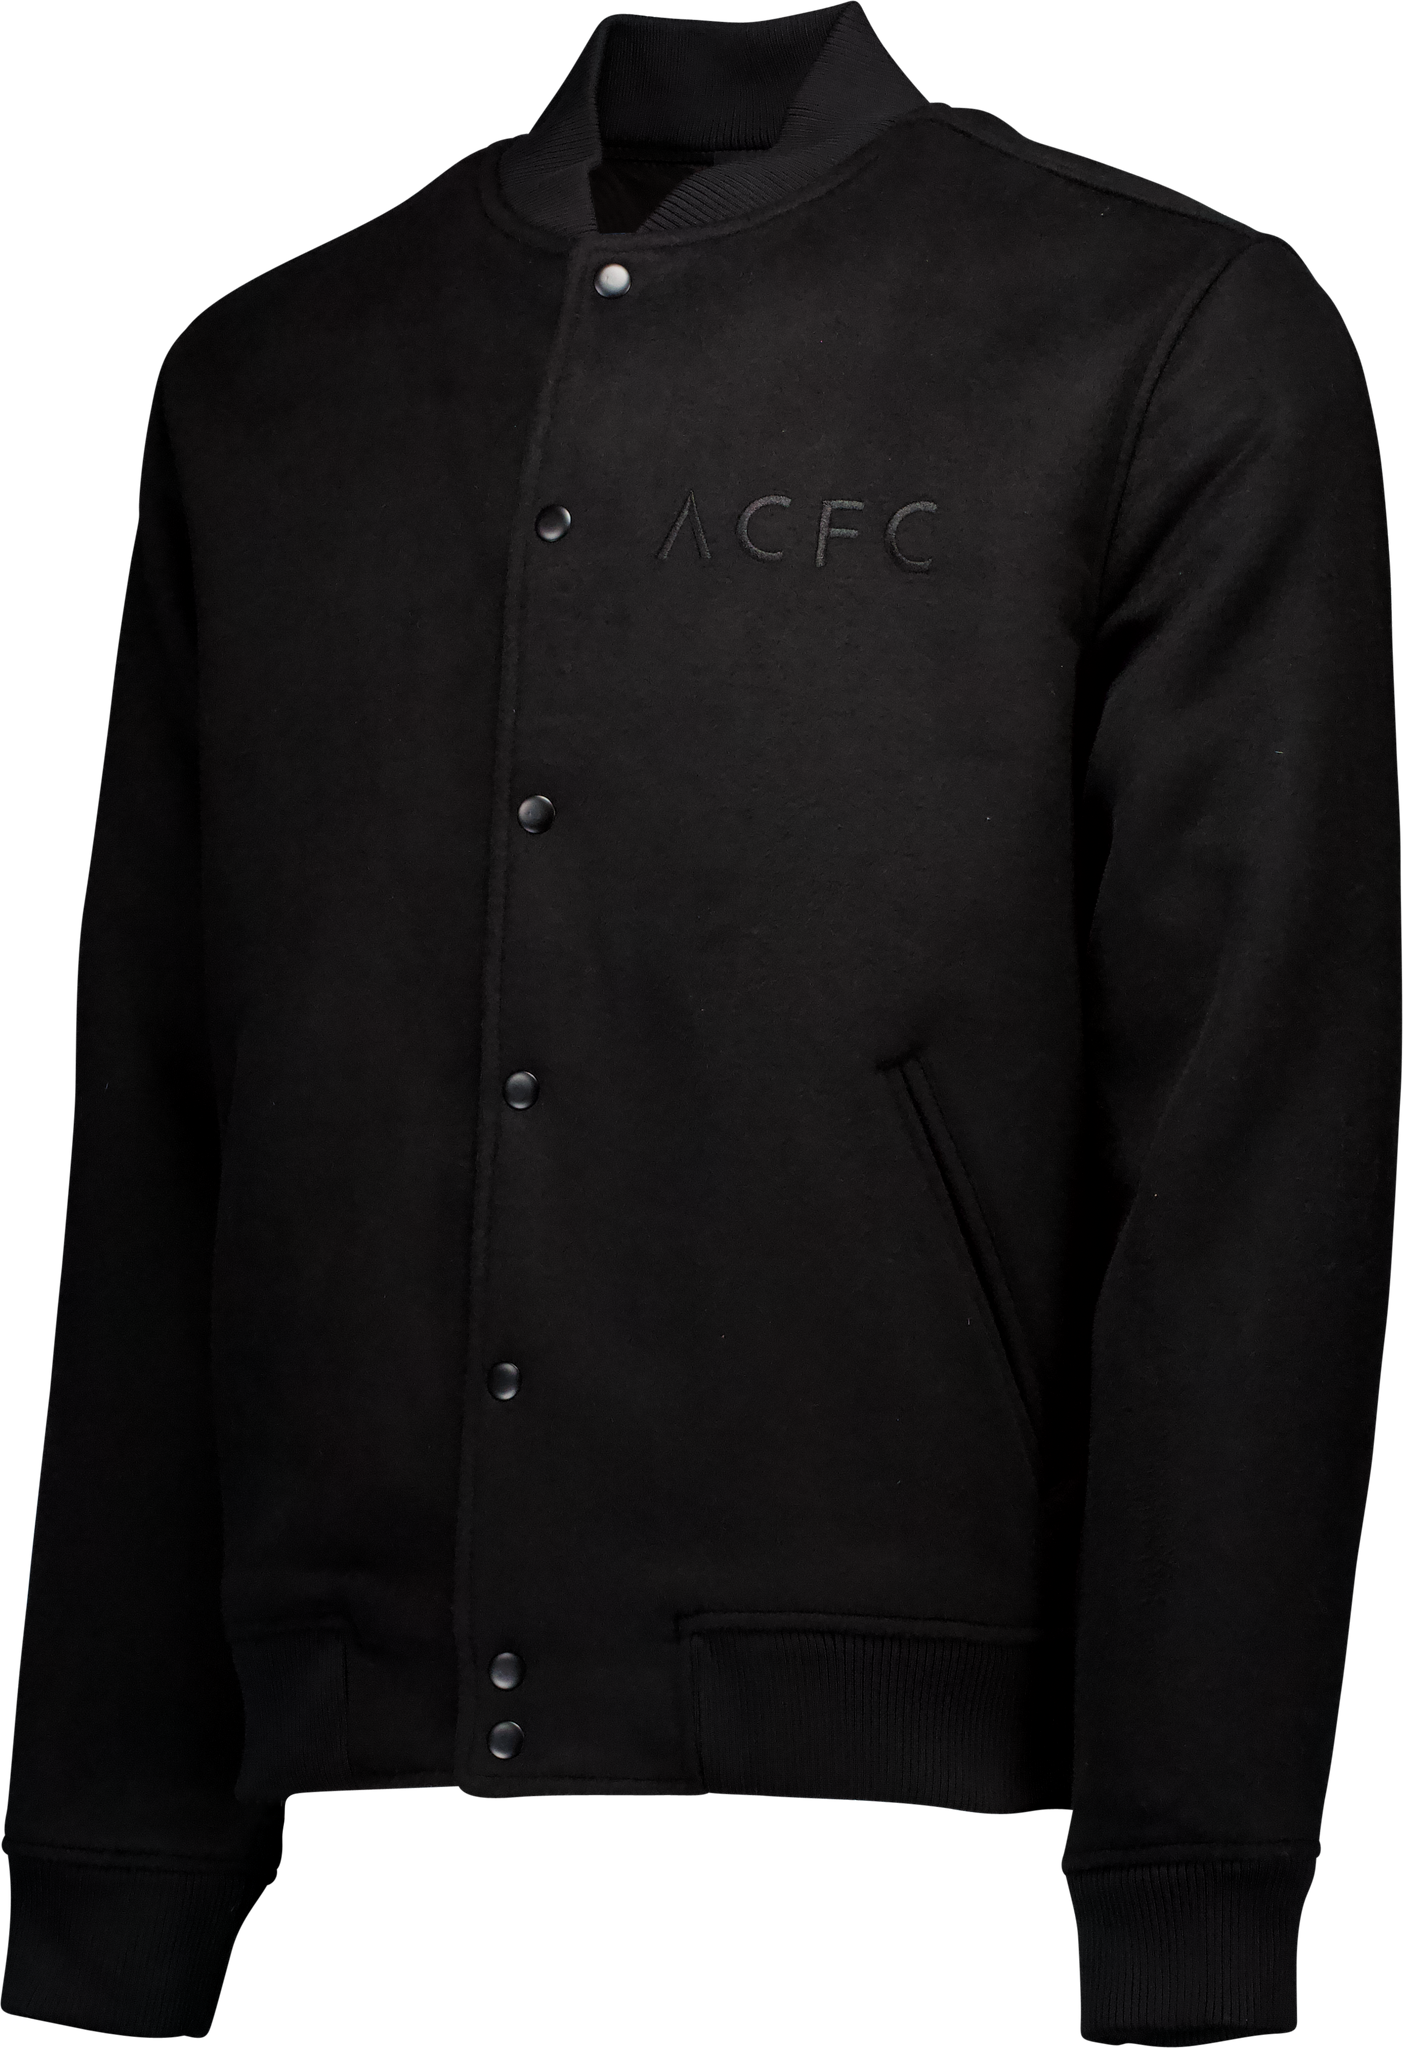 Angel City FC Unisex Black Wool Tonal Varsity Jacket